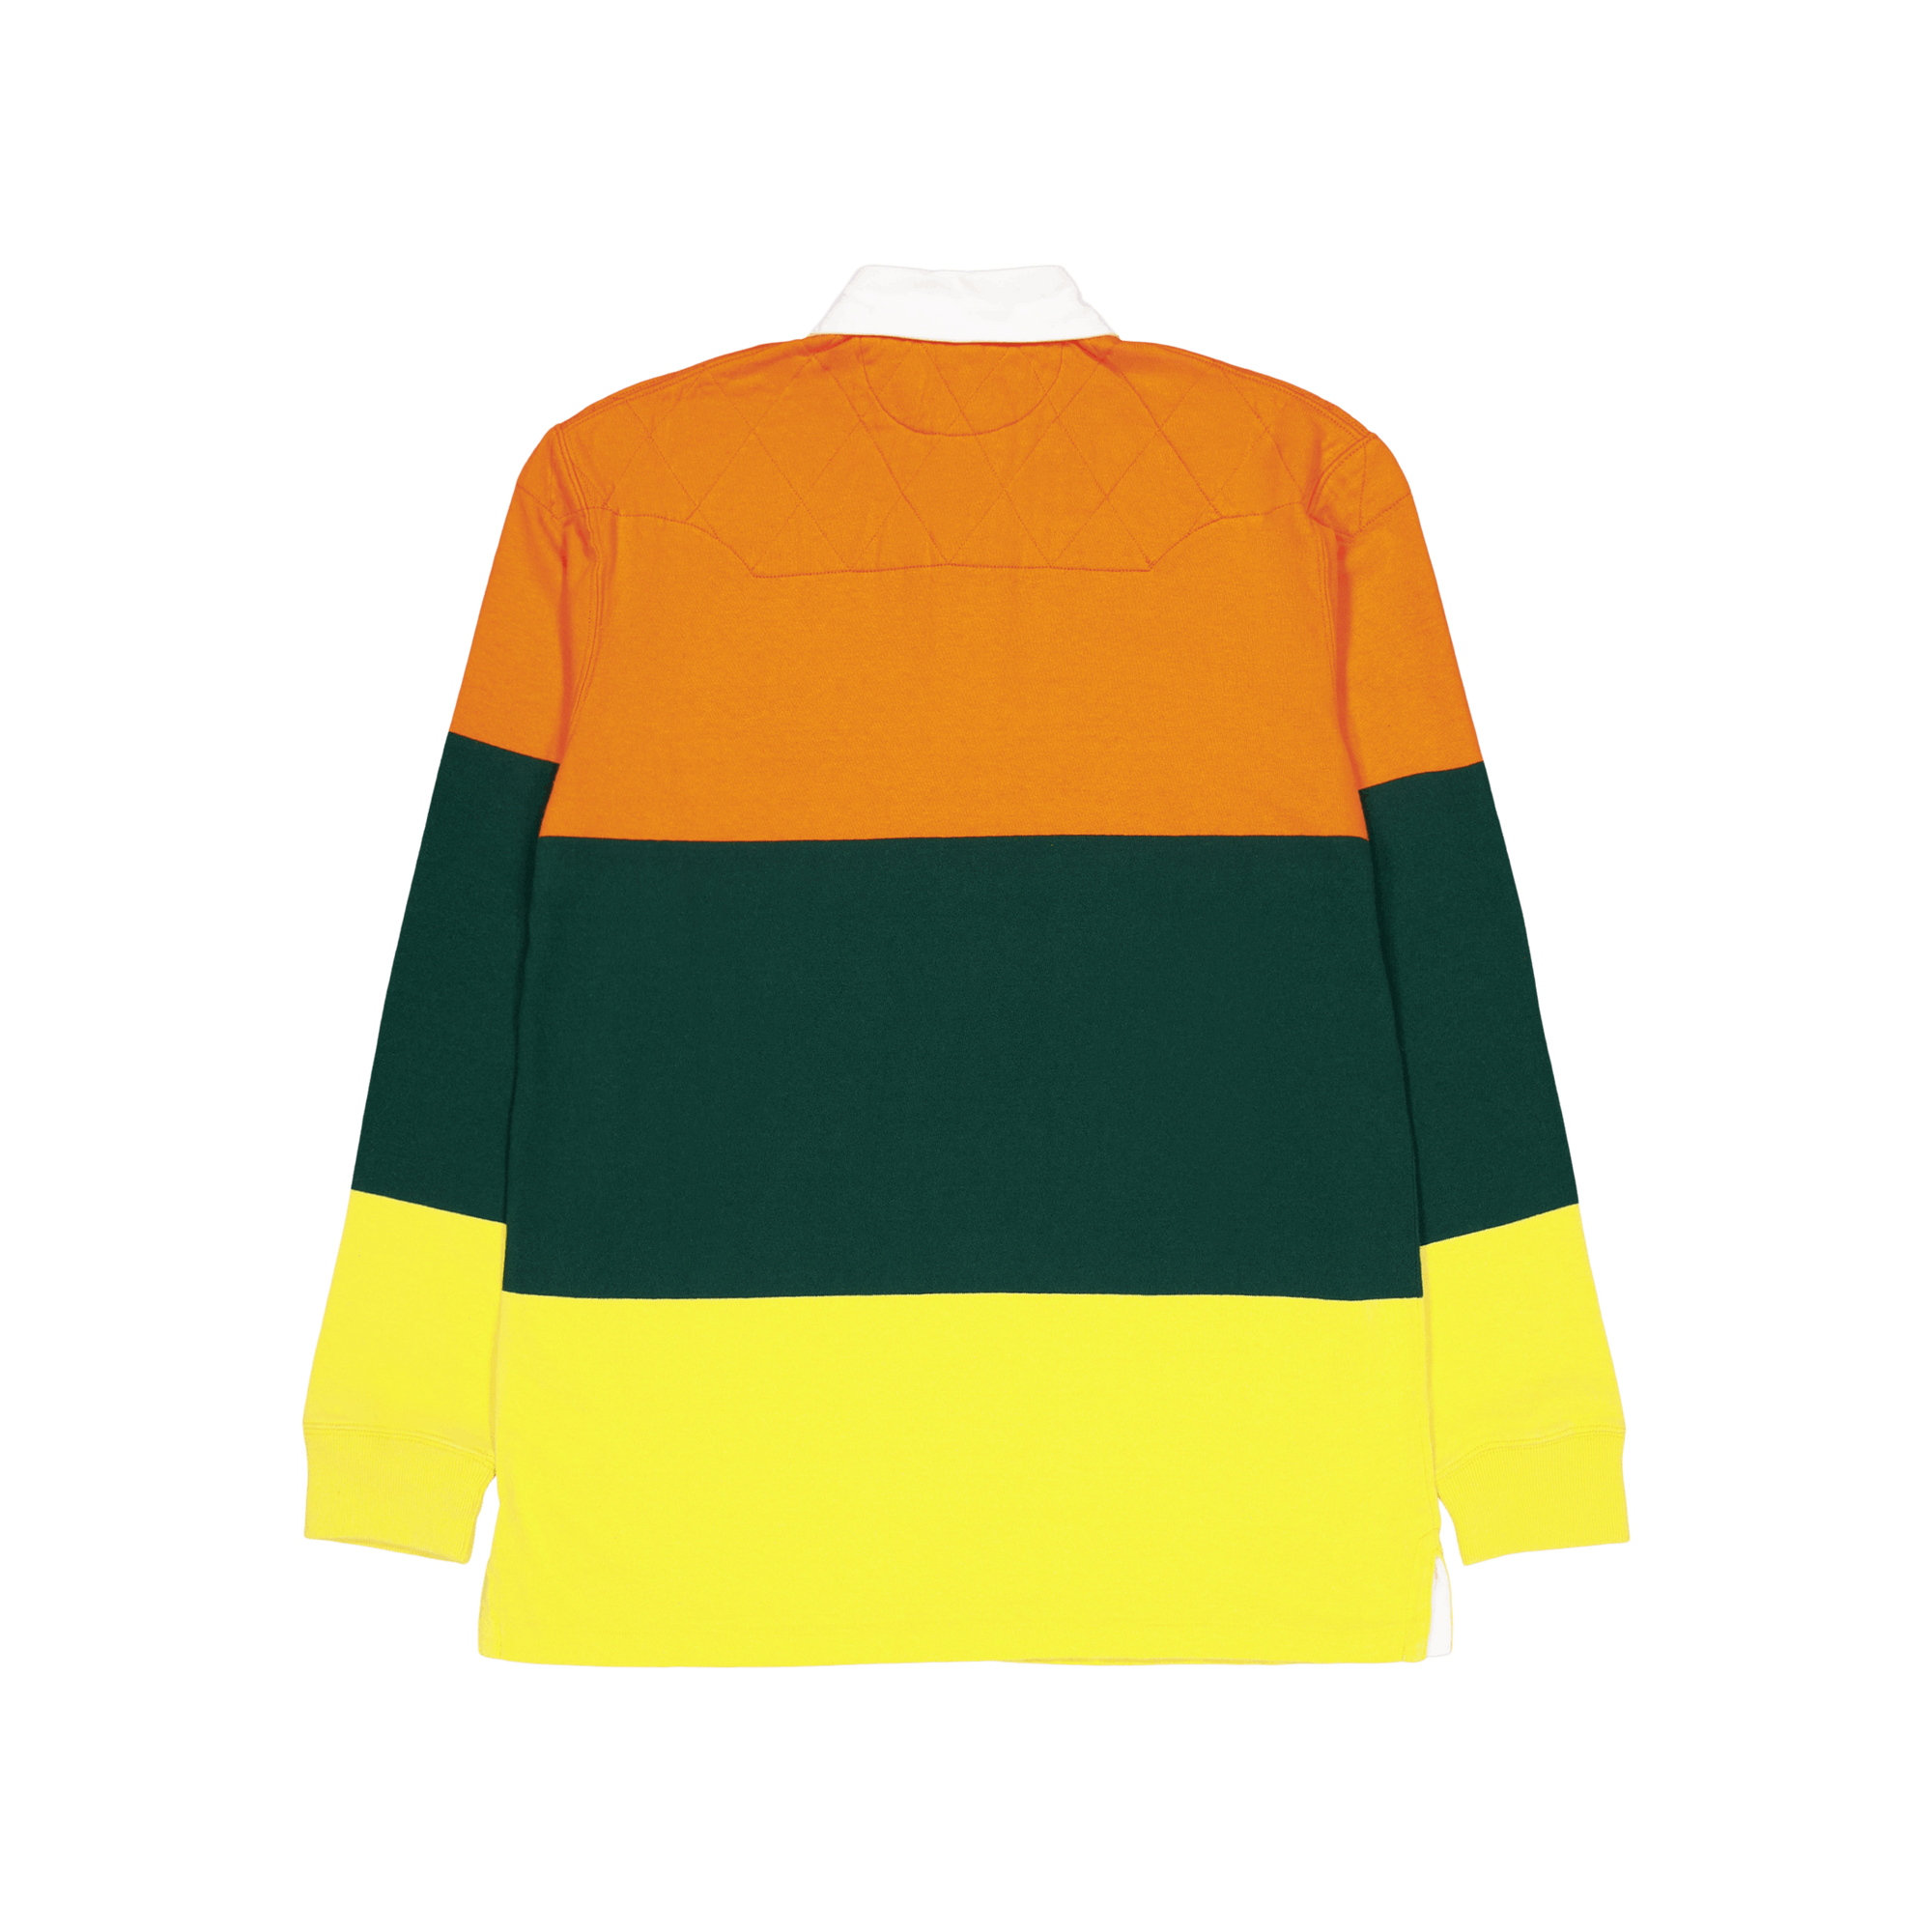 10/1 Oe Rugby Cloth-lsl-rug Spectrum Orange Multi